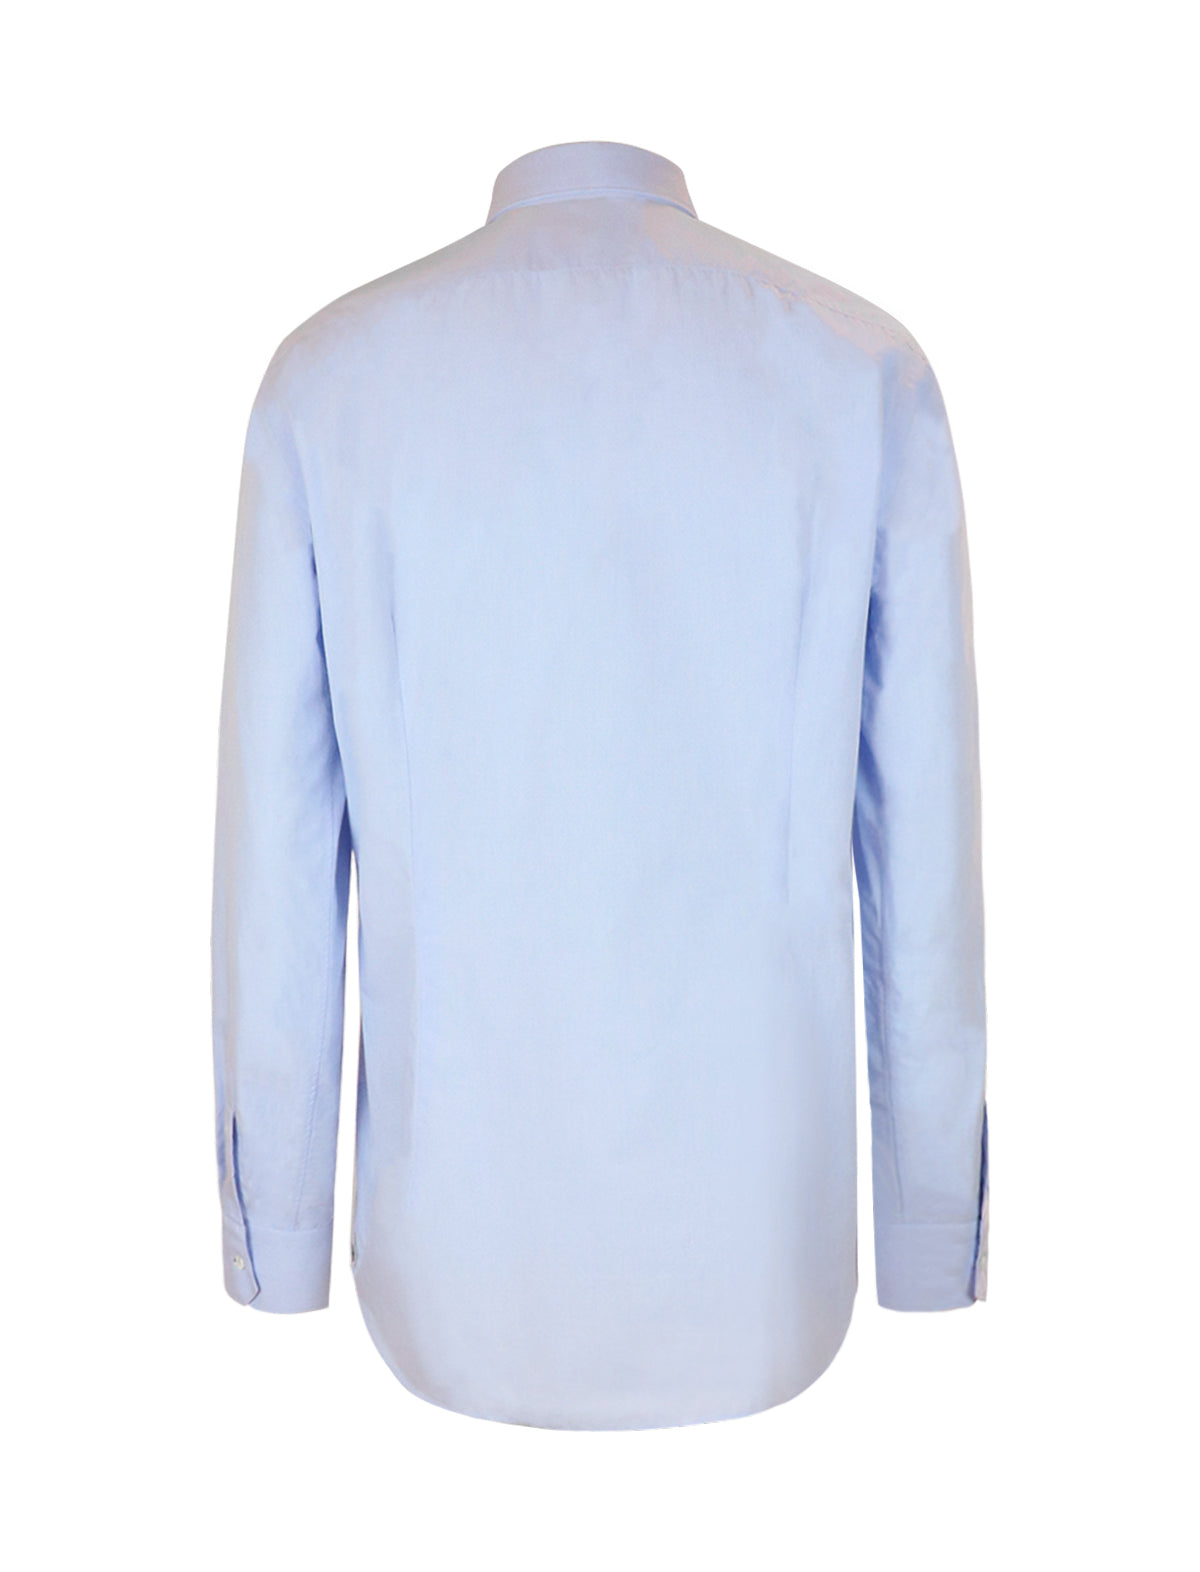 GABRIELE PASINI Cotton Shirt in Light Blue